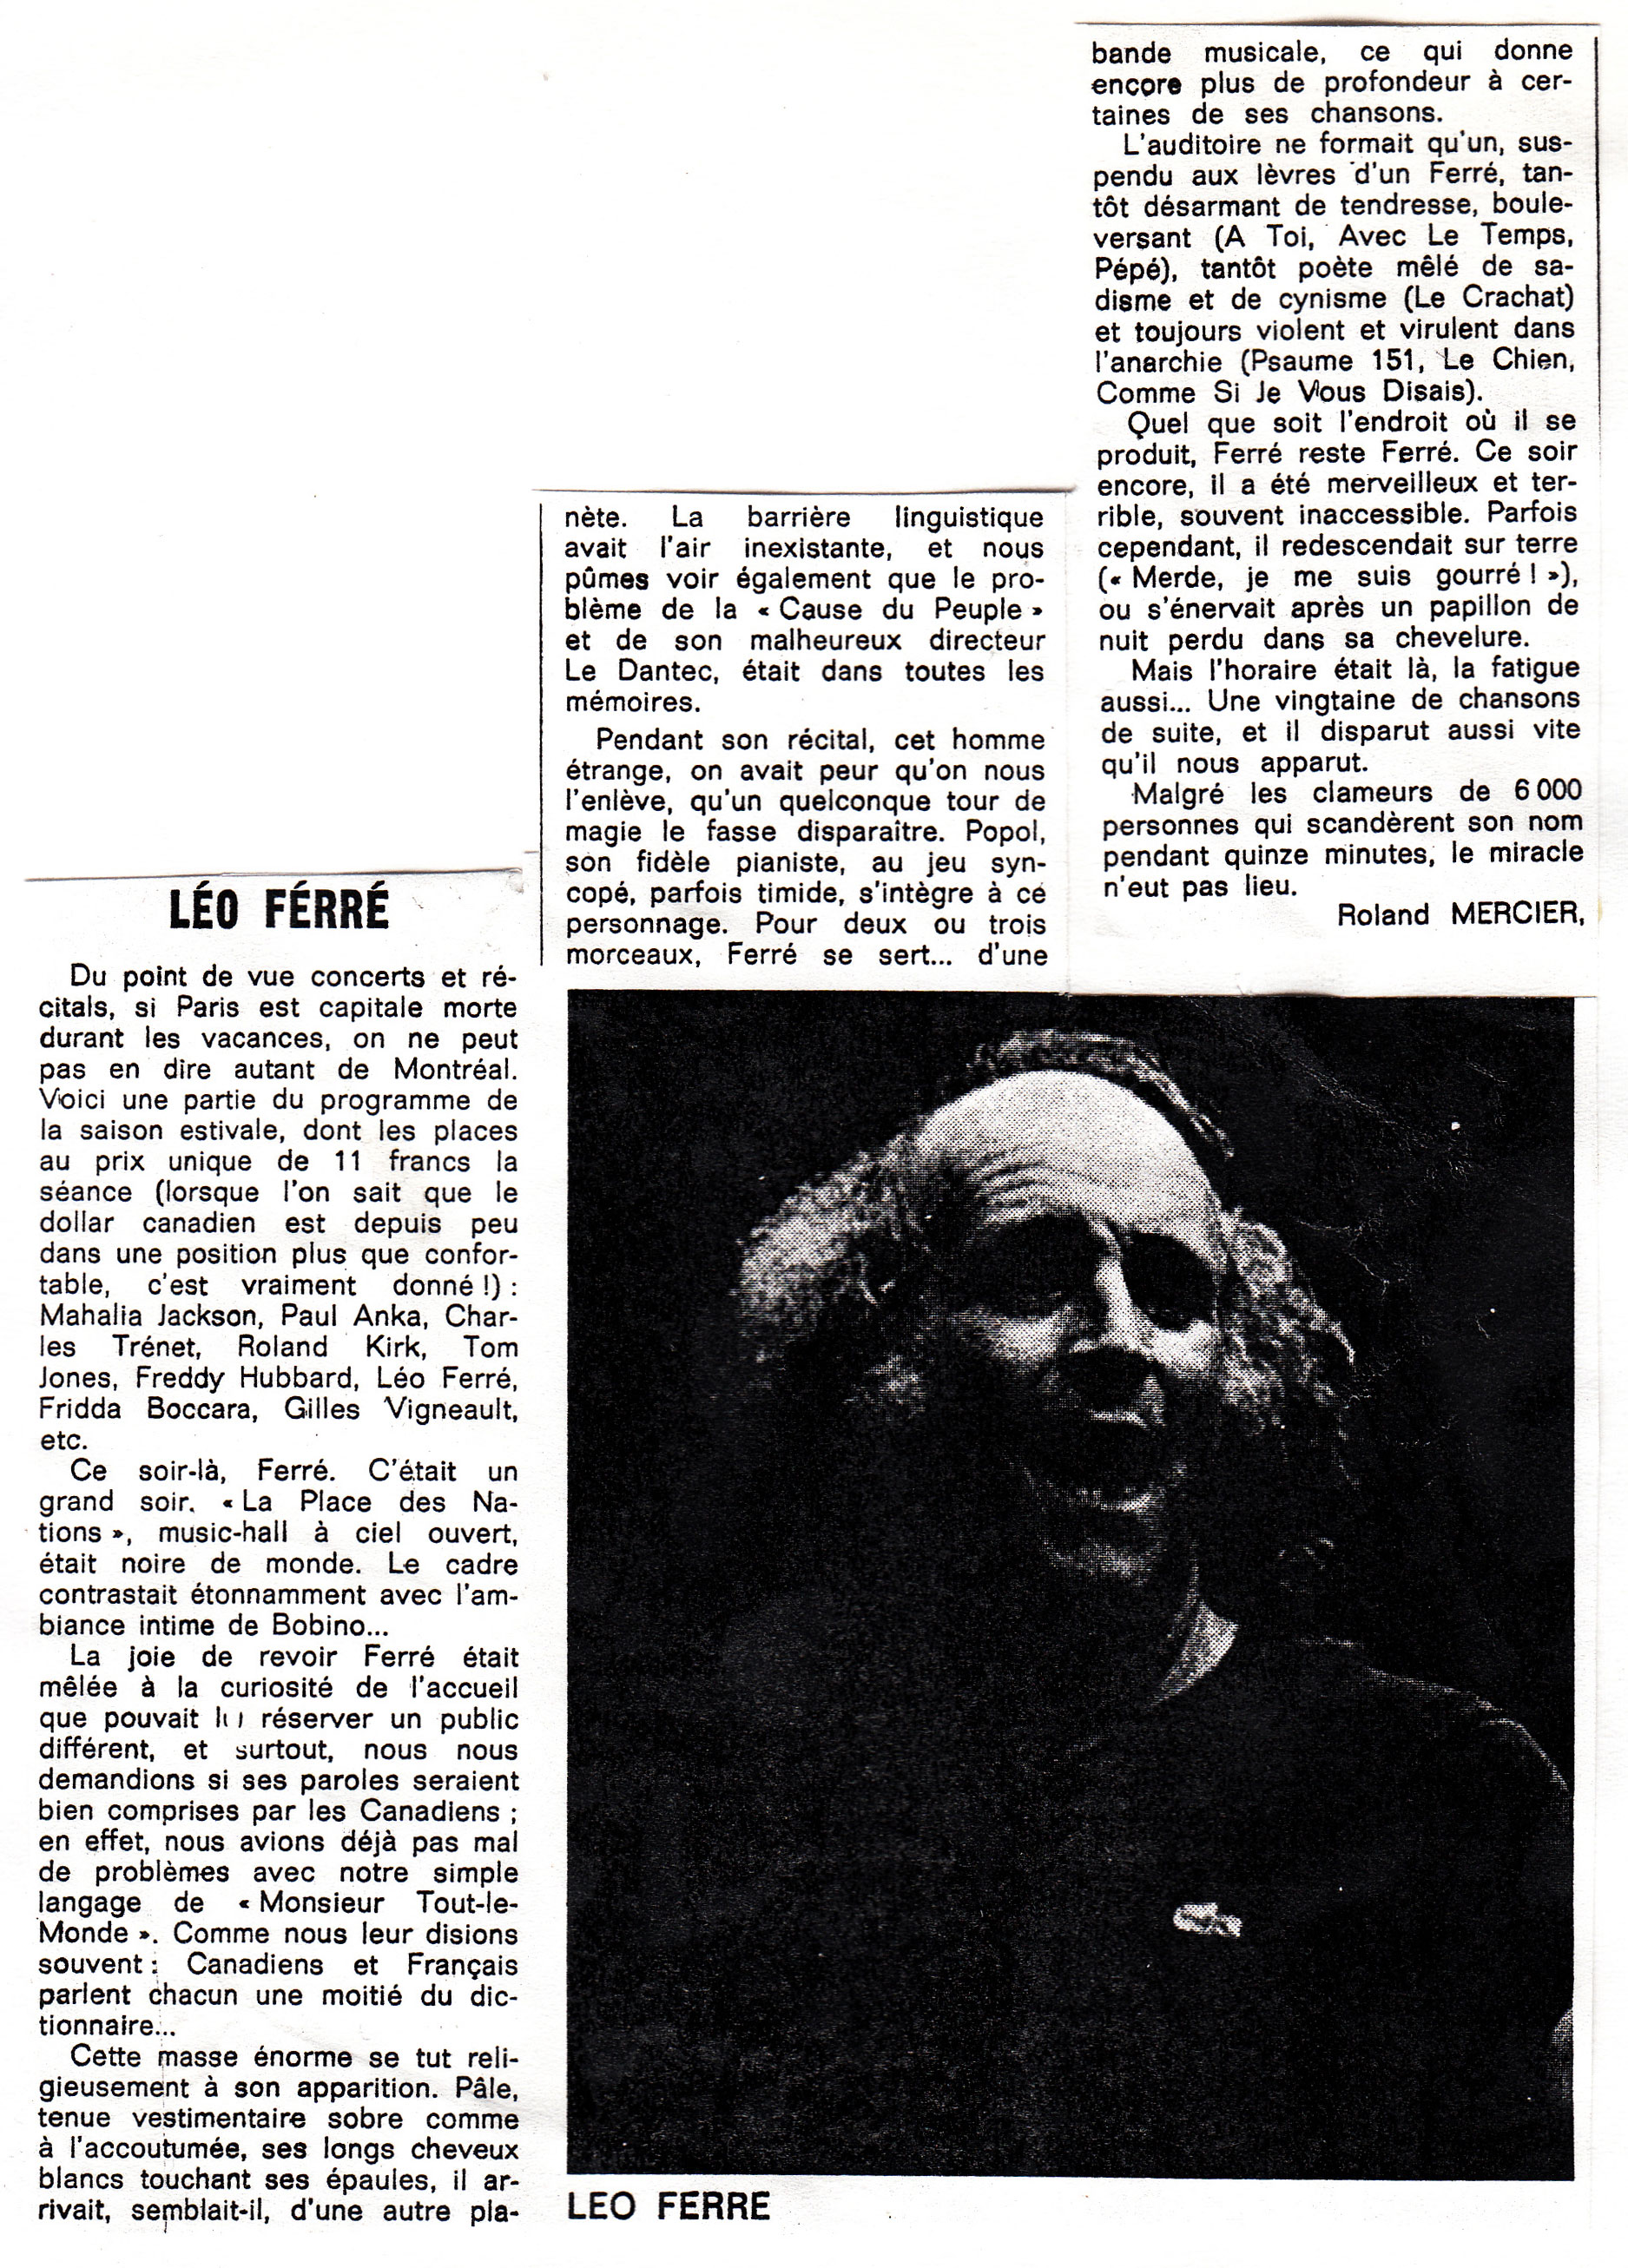 Léo Ferré - Pop Music Superhebdo du 6 janvier 1972